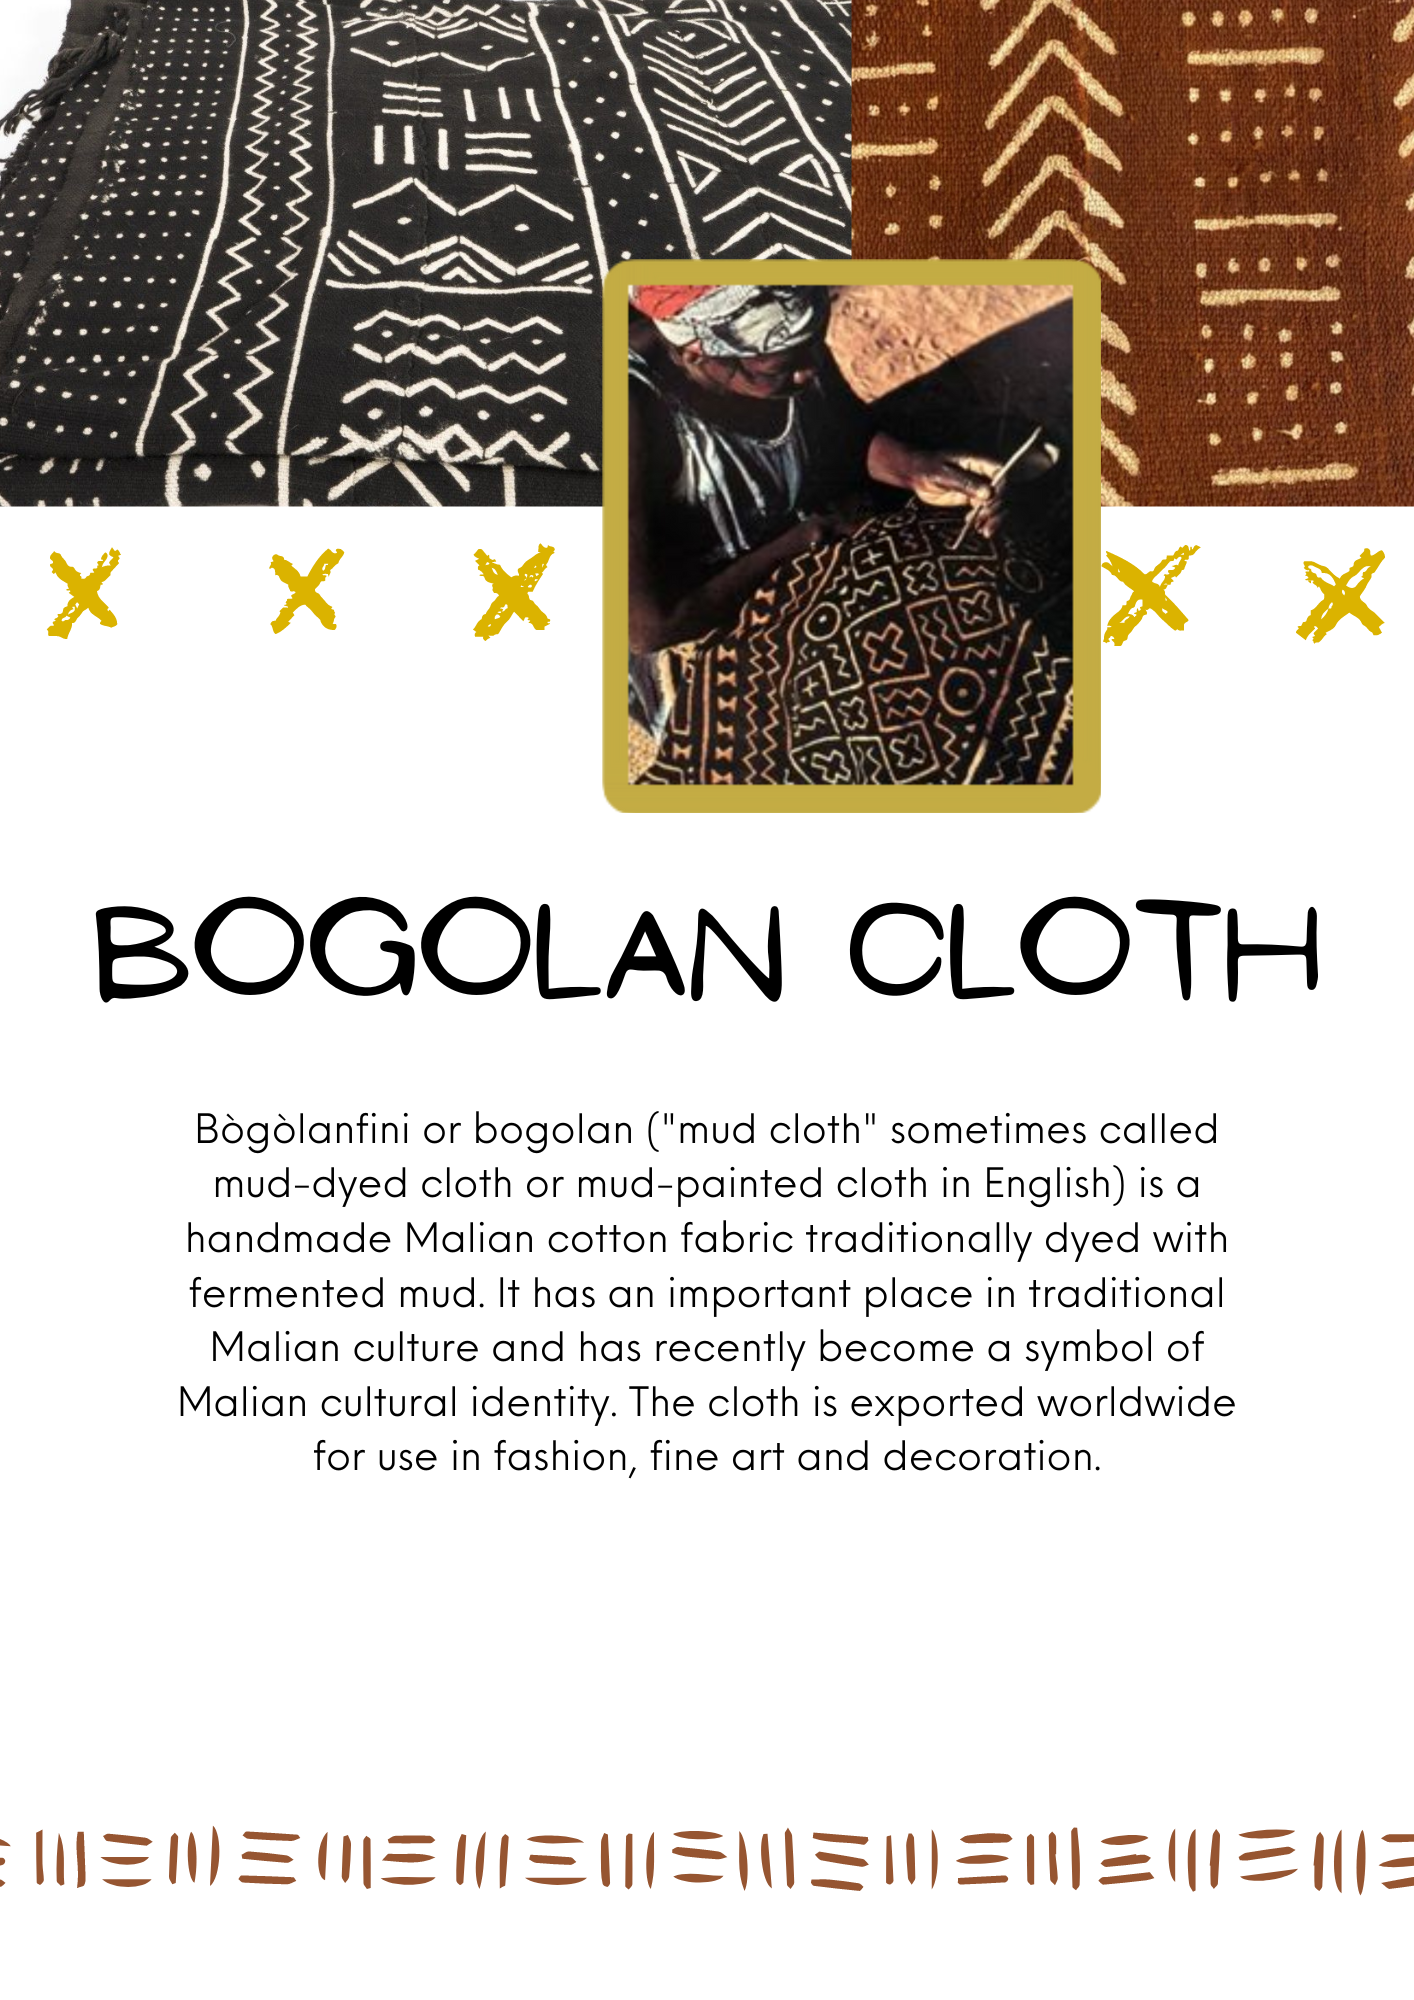 Bogolan cloth